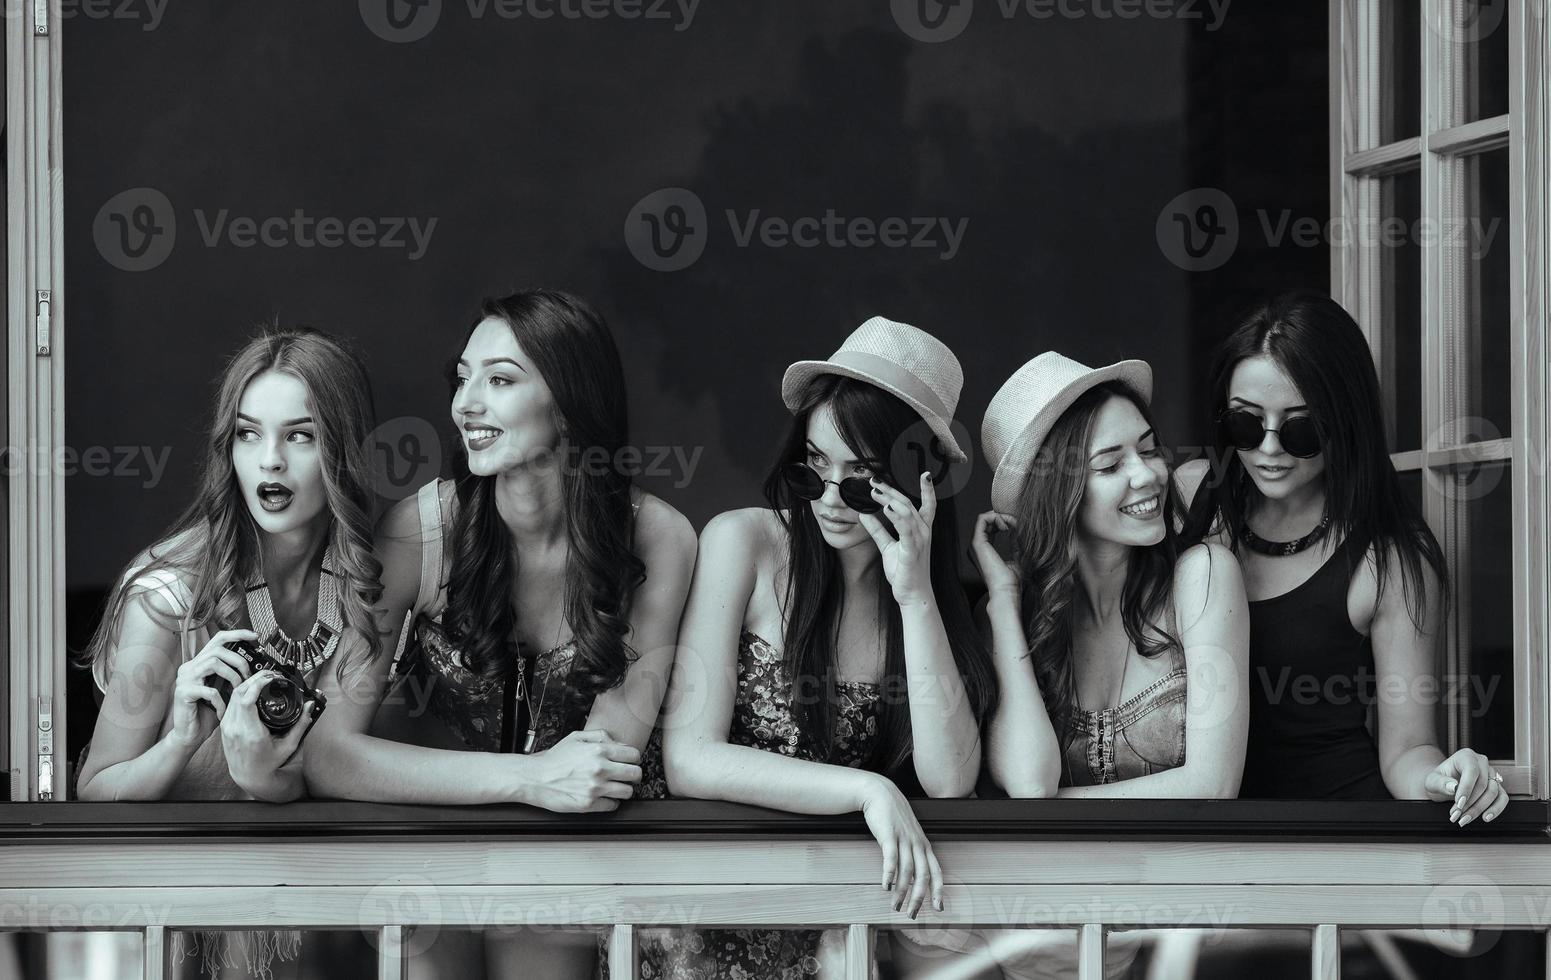 cinco lindas meninas foto